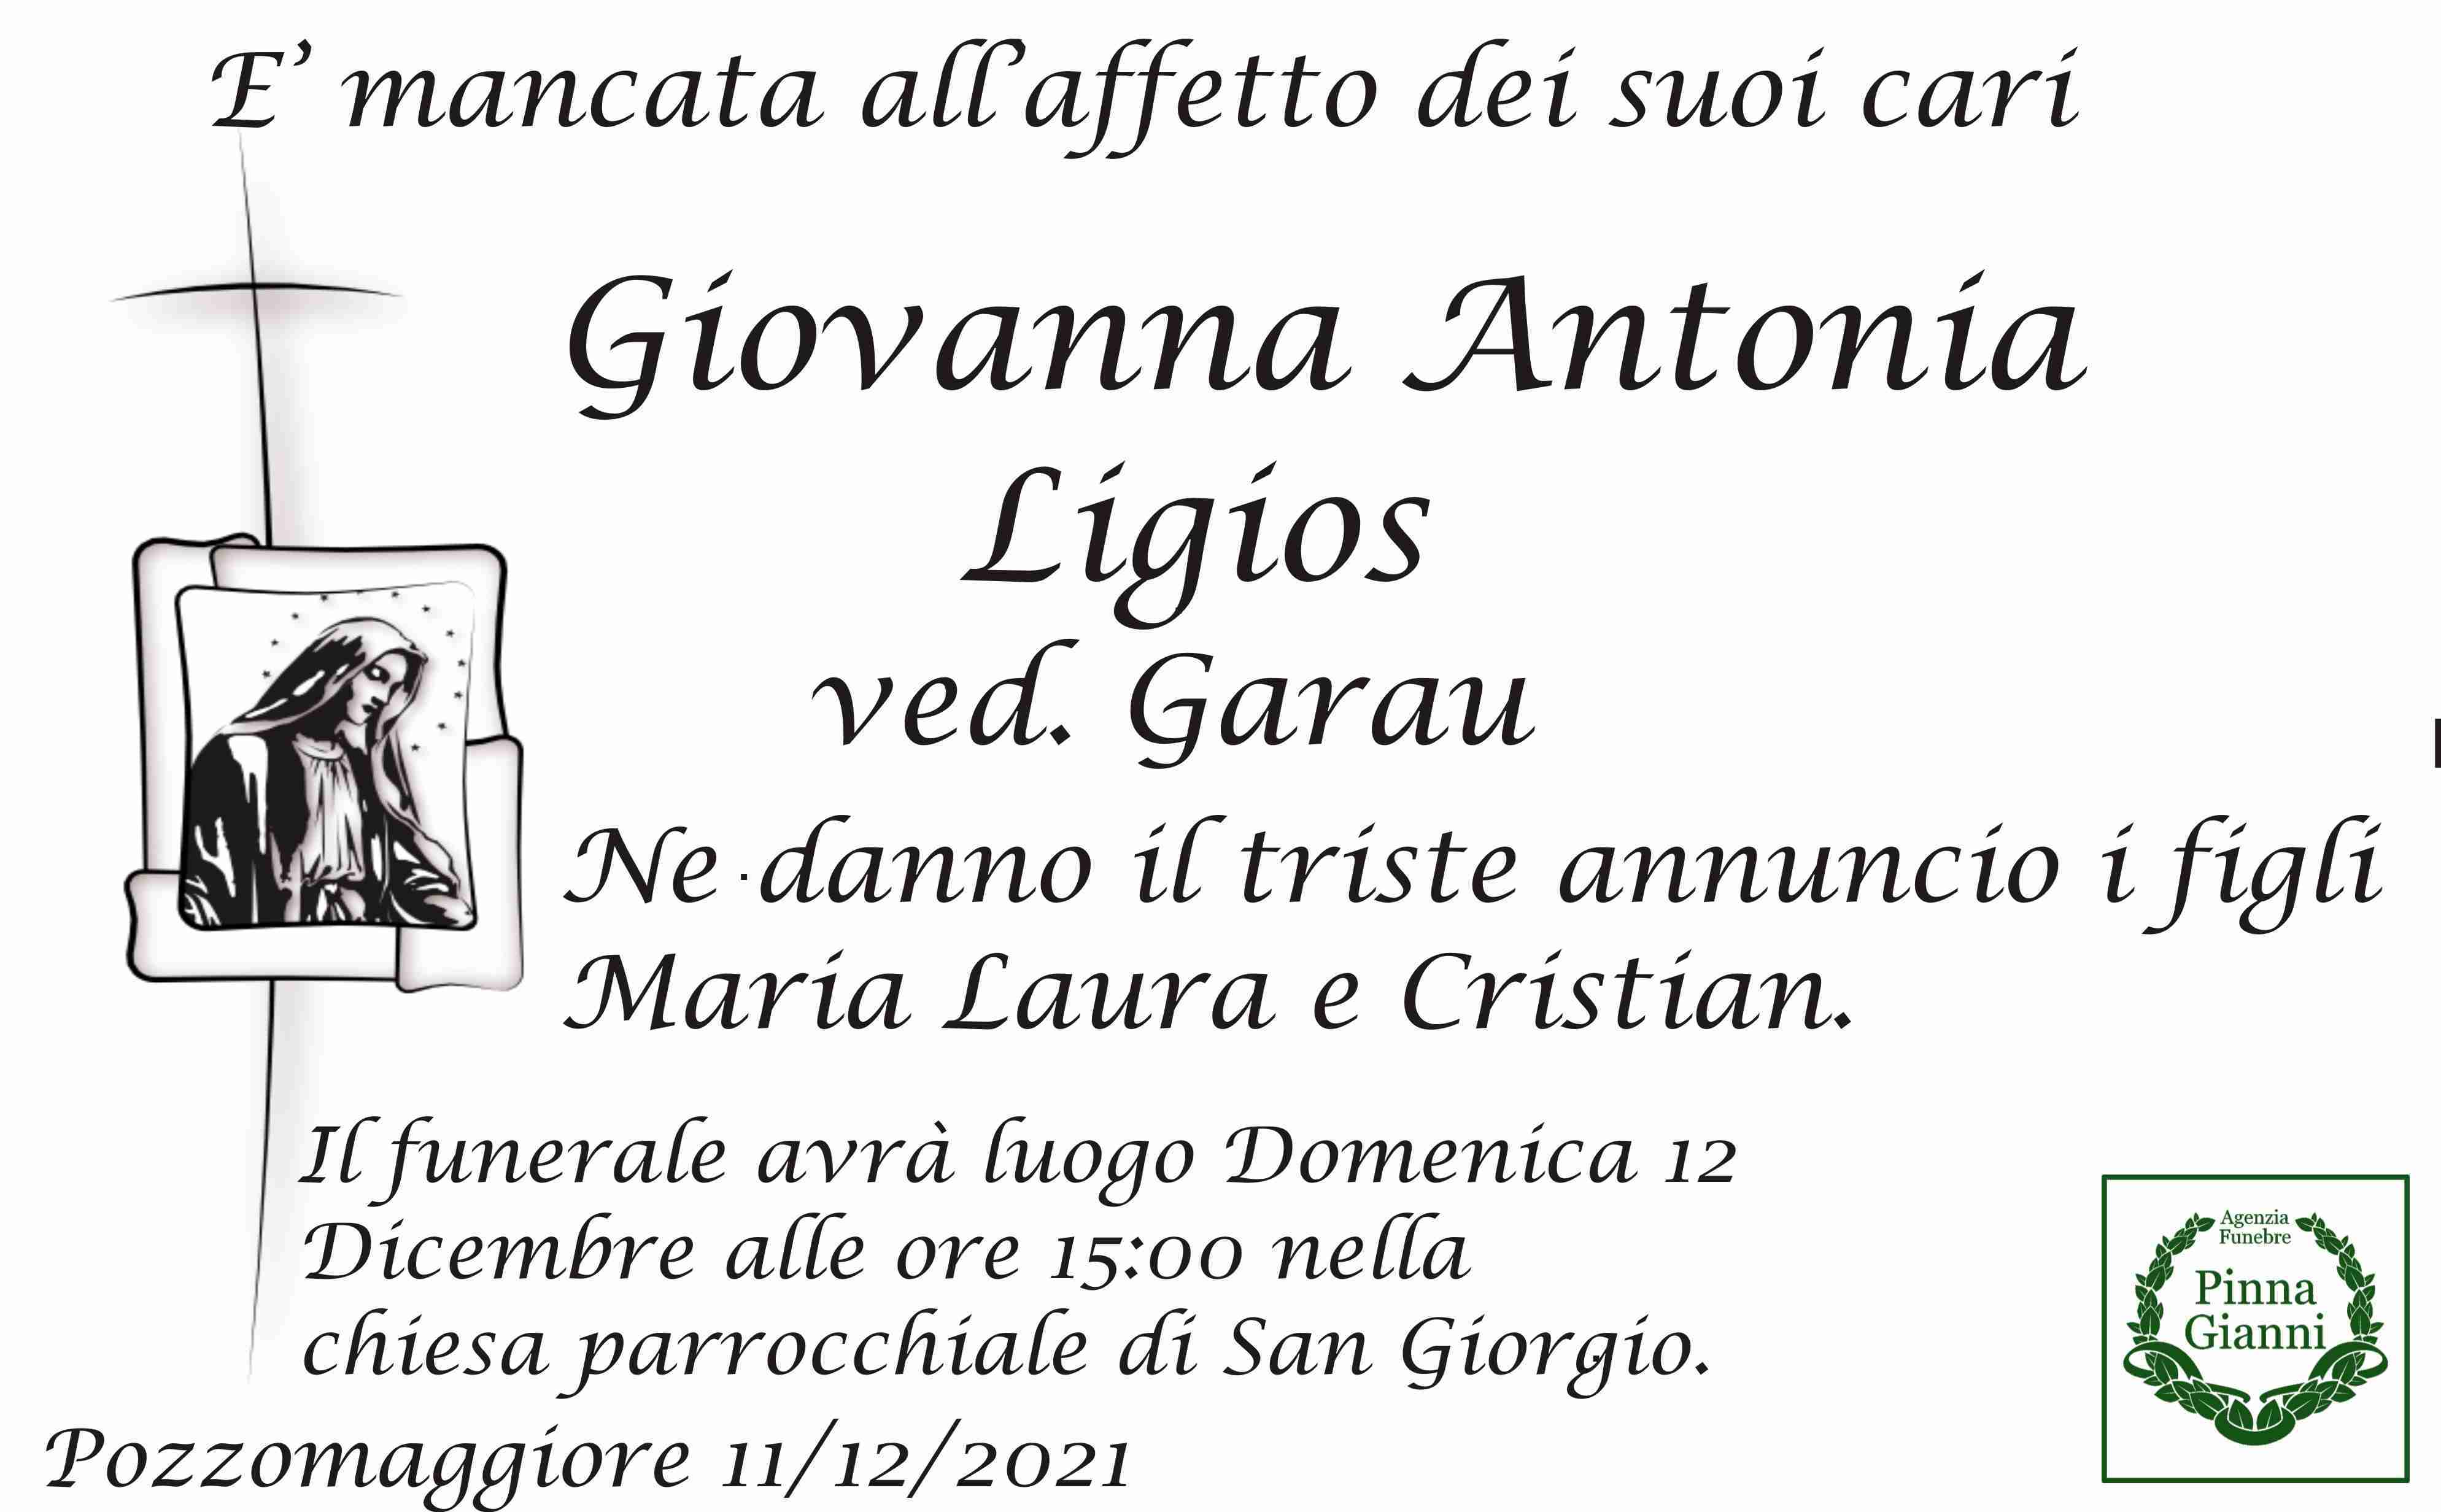 Giovanna Antonia Ligios